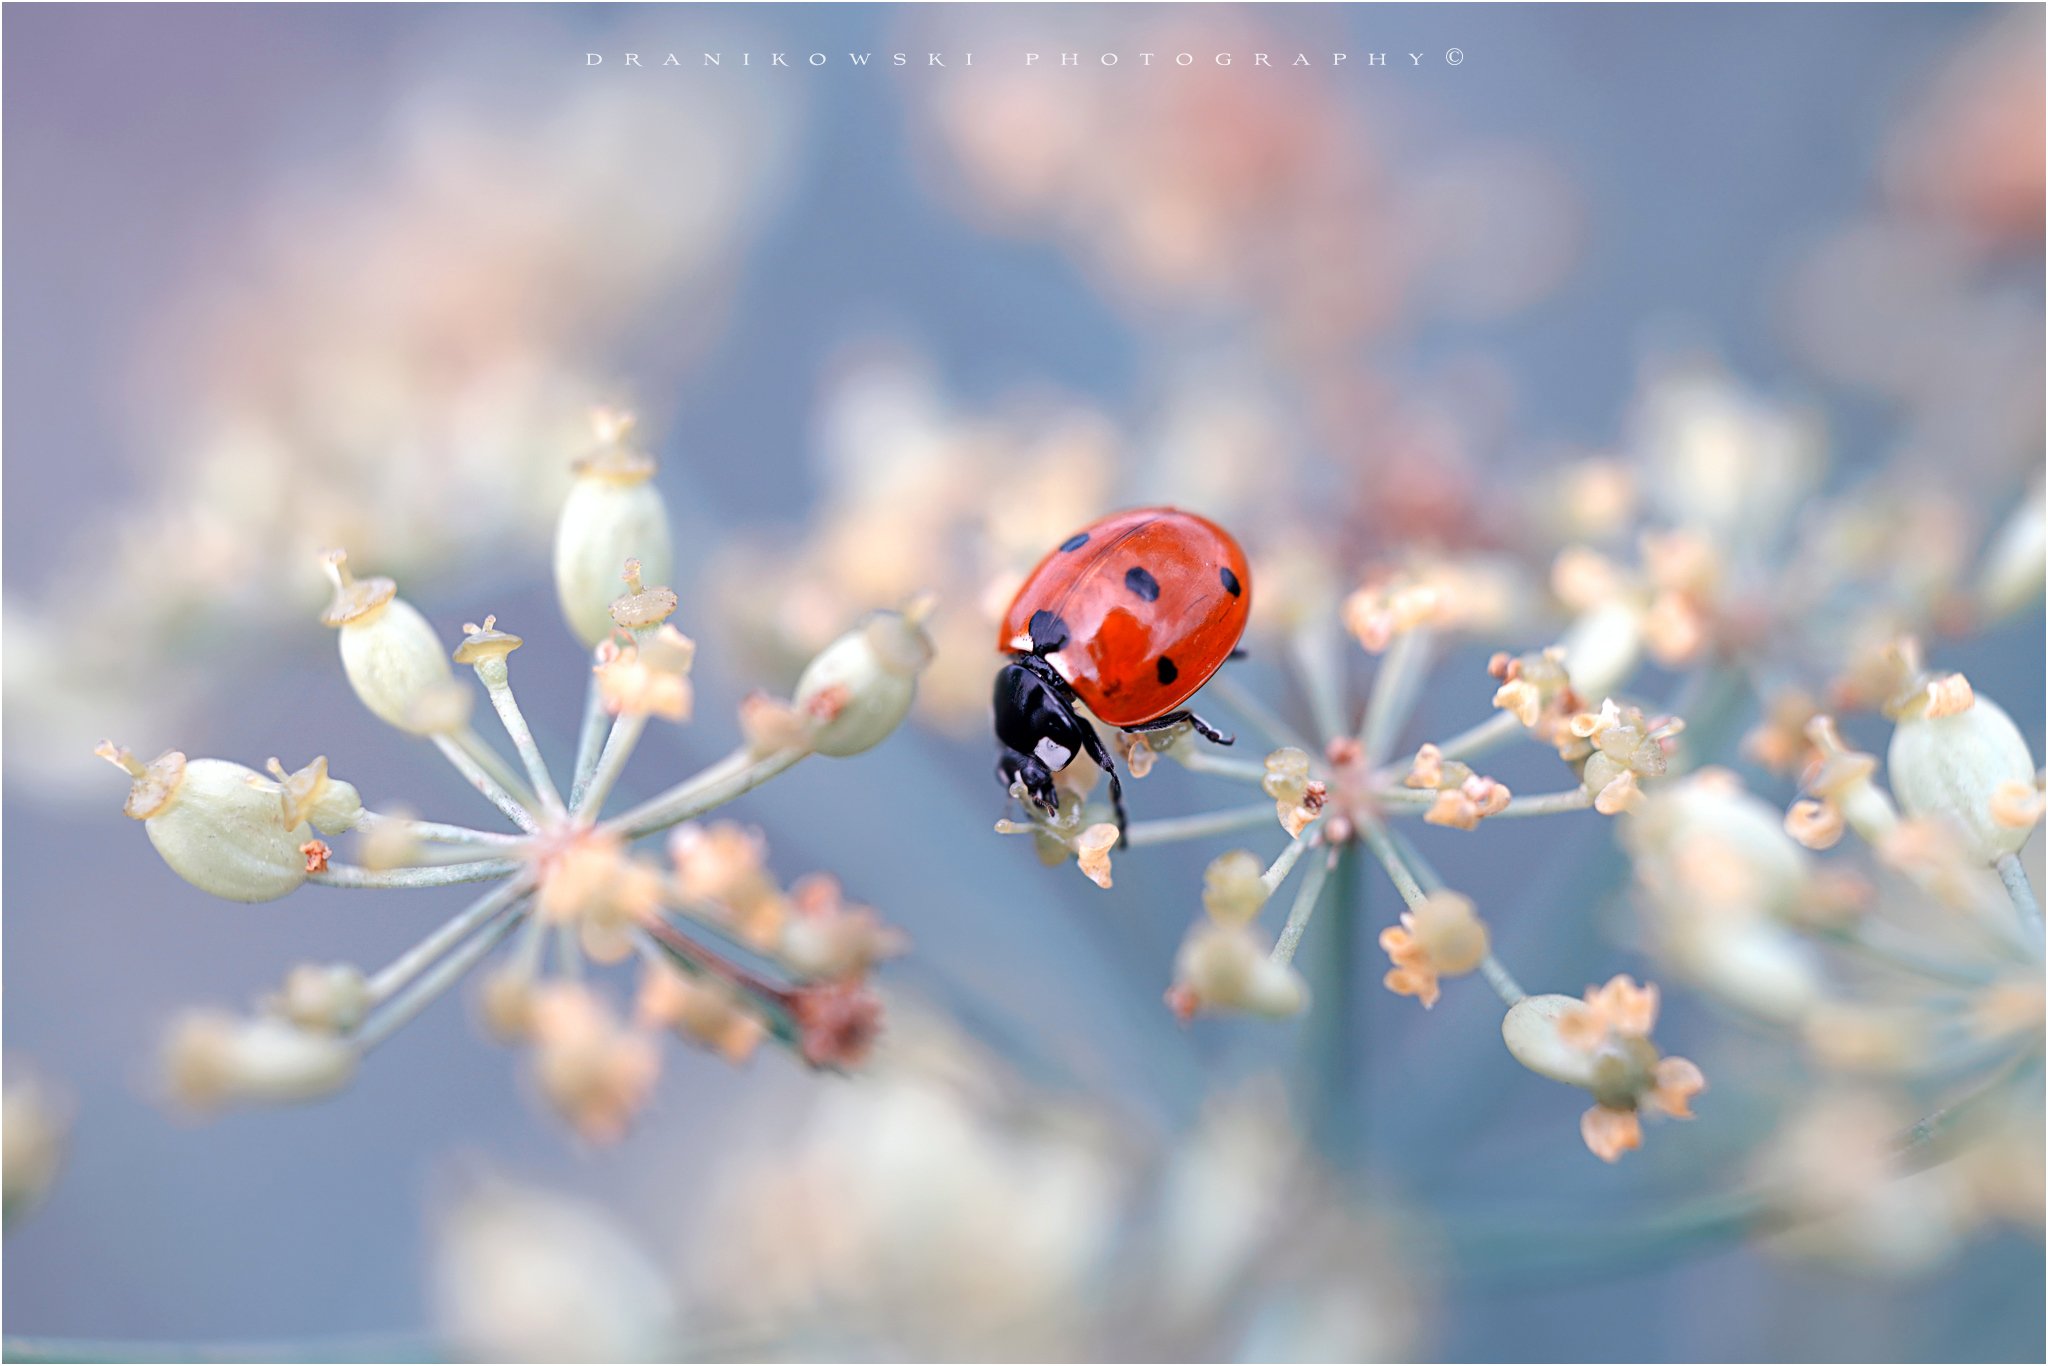 ladybug ladybird artistic macro m42 bokeh magic biedronka natural, Radoslaw Dranikowski